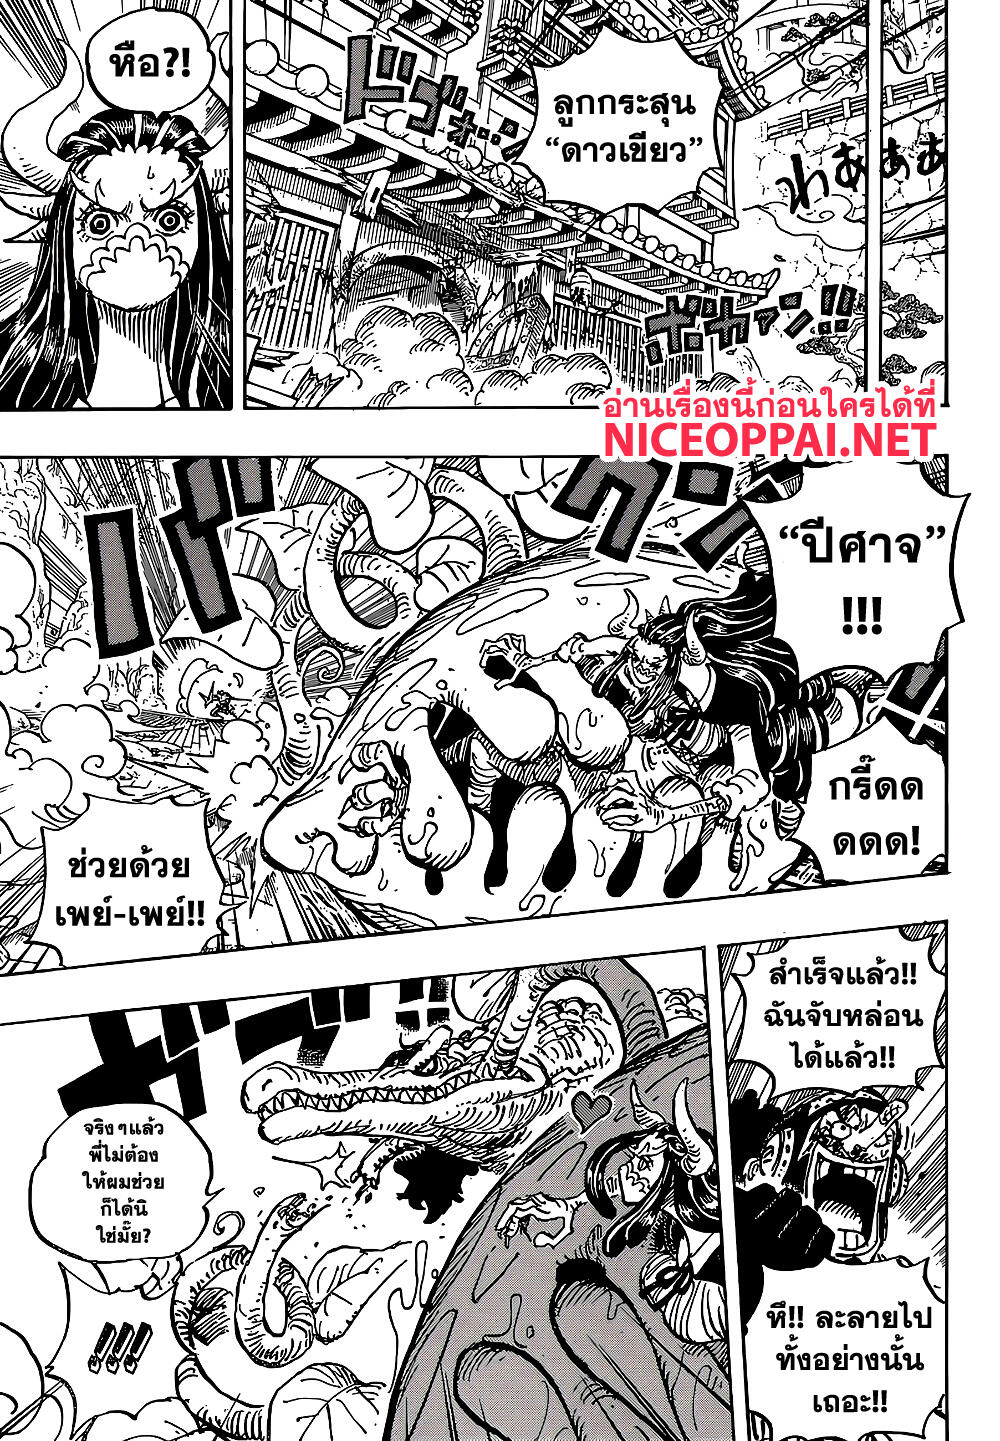 One Piece 995 TH